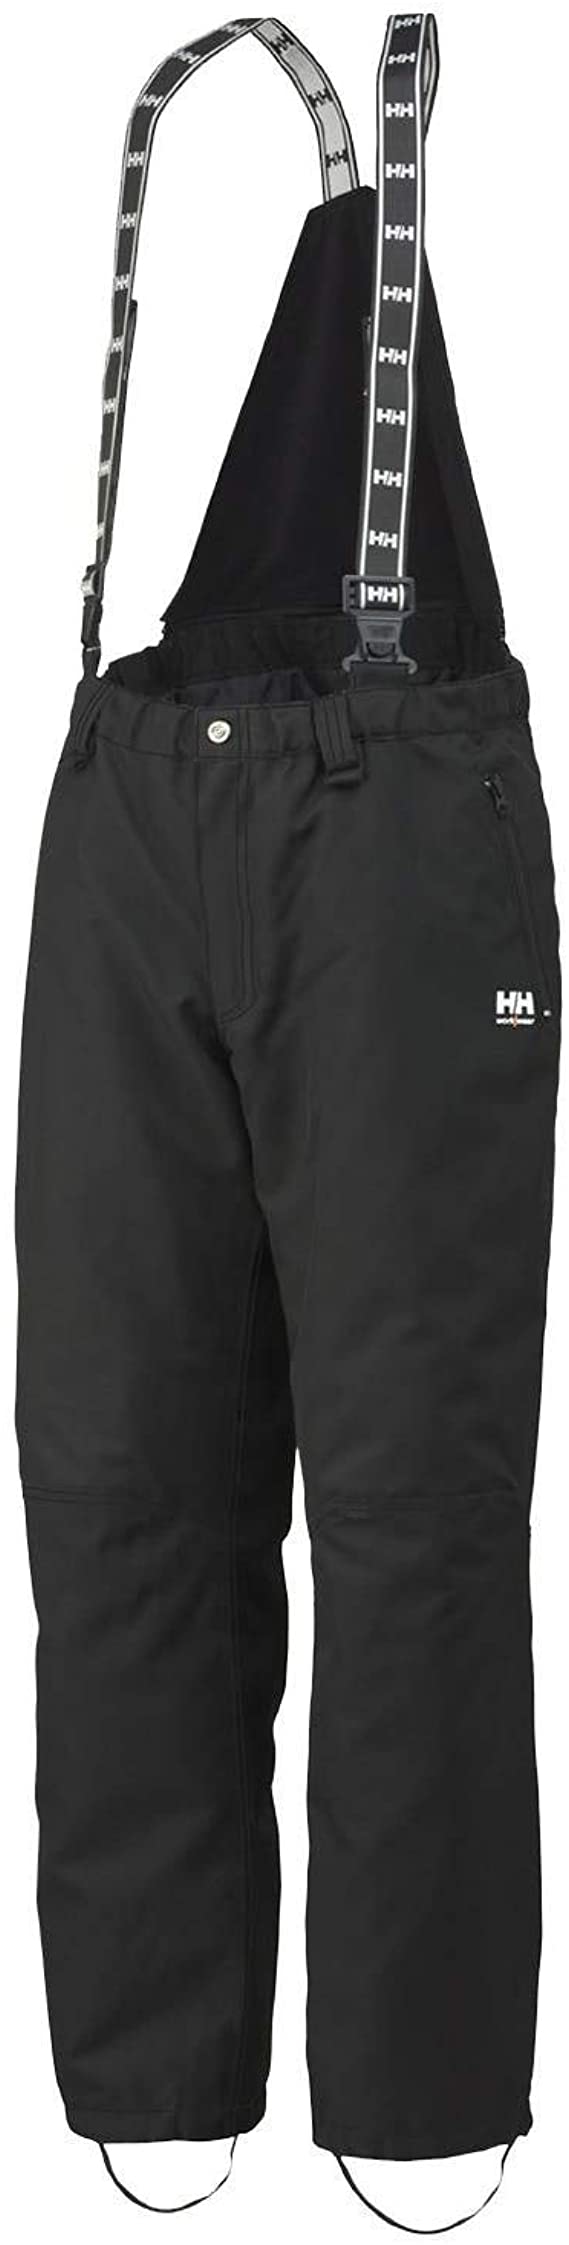 Helly Hansen Berg Insulated Bib Pants | Black | Small - 4XLarge Work Wear - Cleanflow